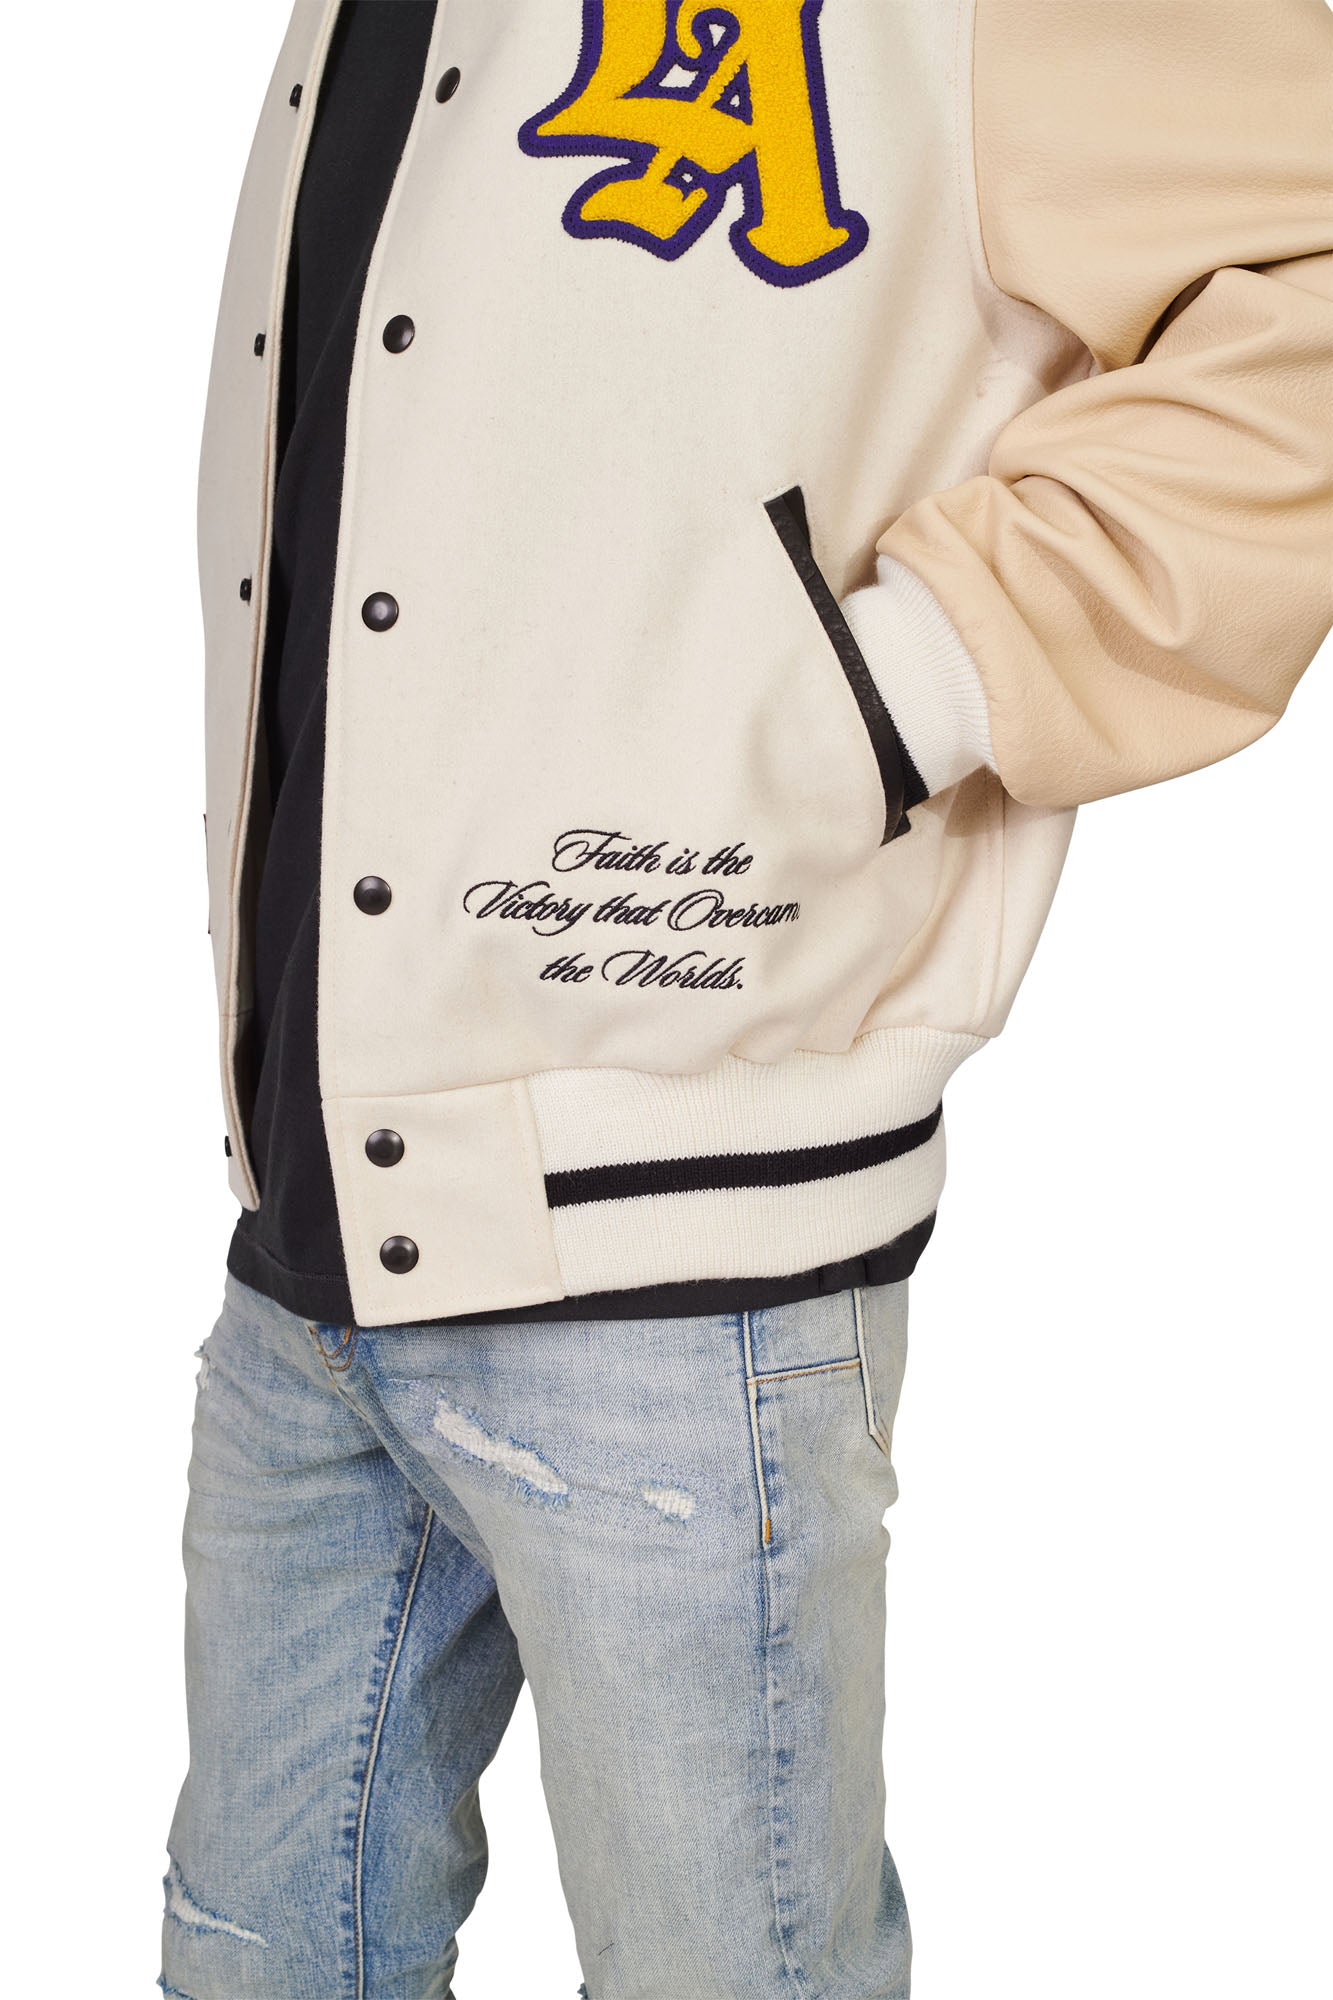 PURPLE BRAND - Men's Letterman Jacket - Style No. P320 - Golden Bear White and Gold -  Font Detail